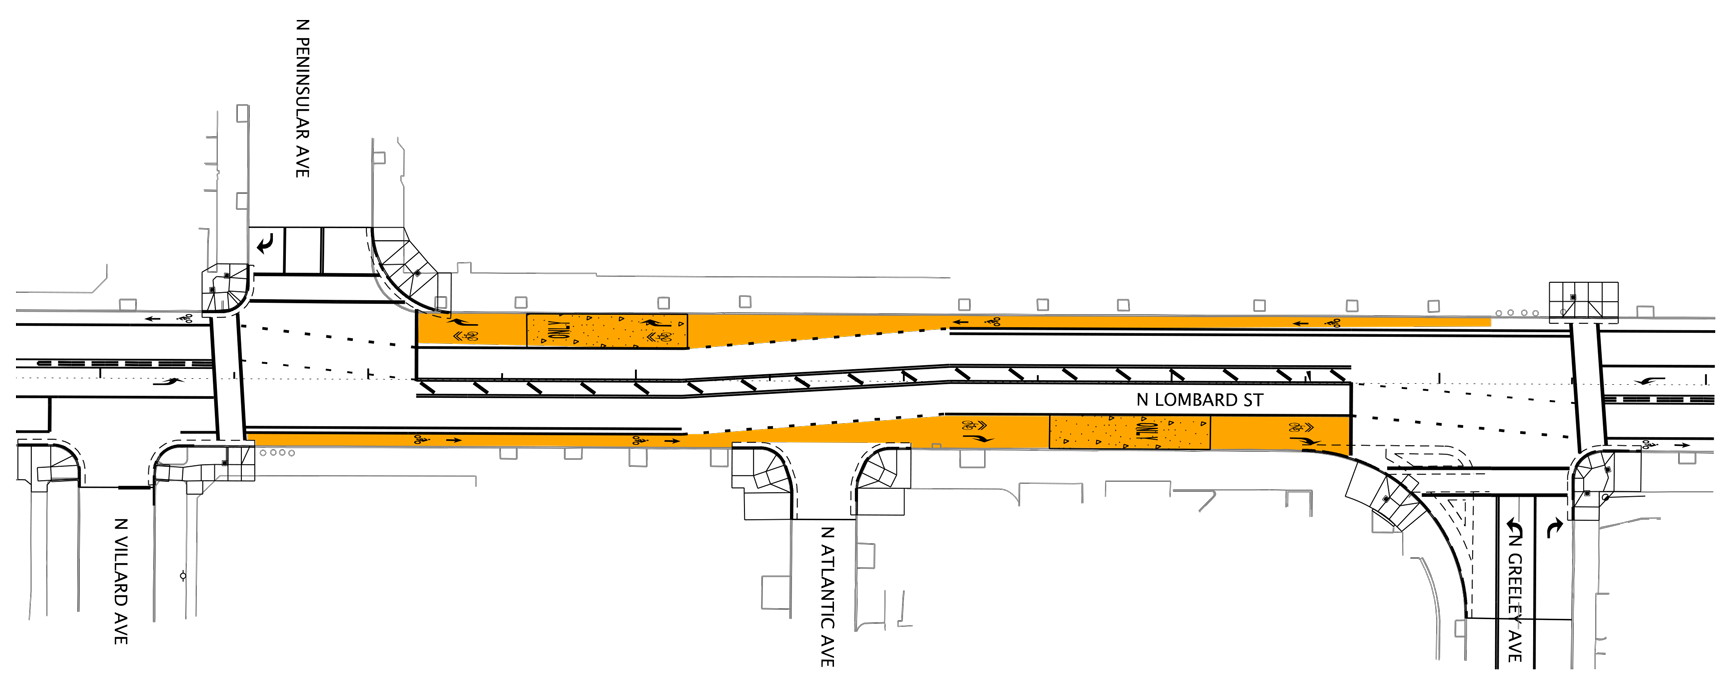 Shared lane diagram